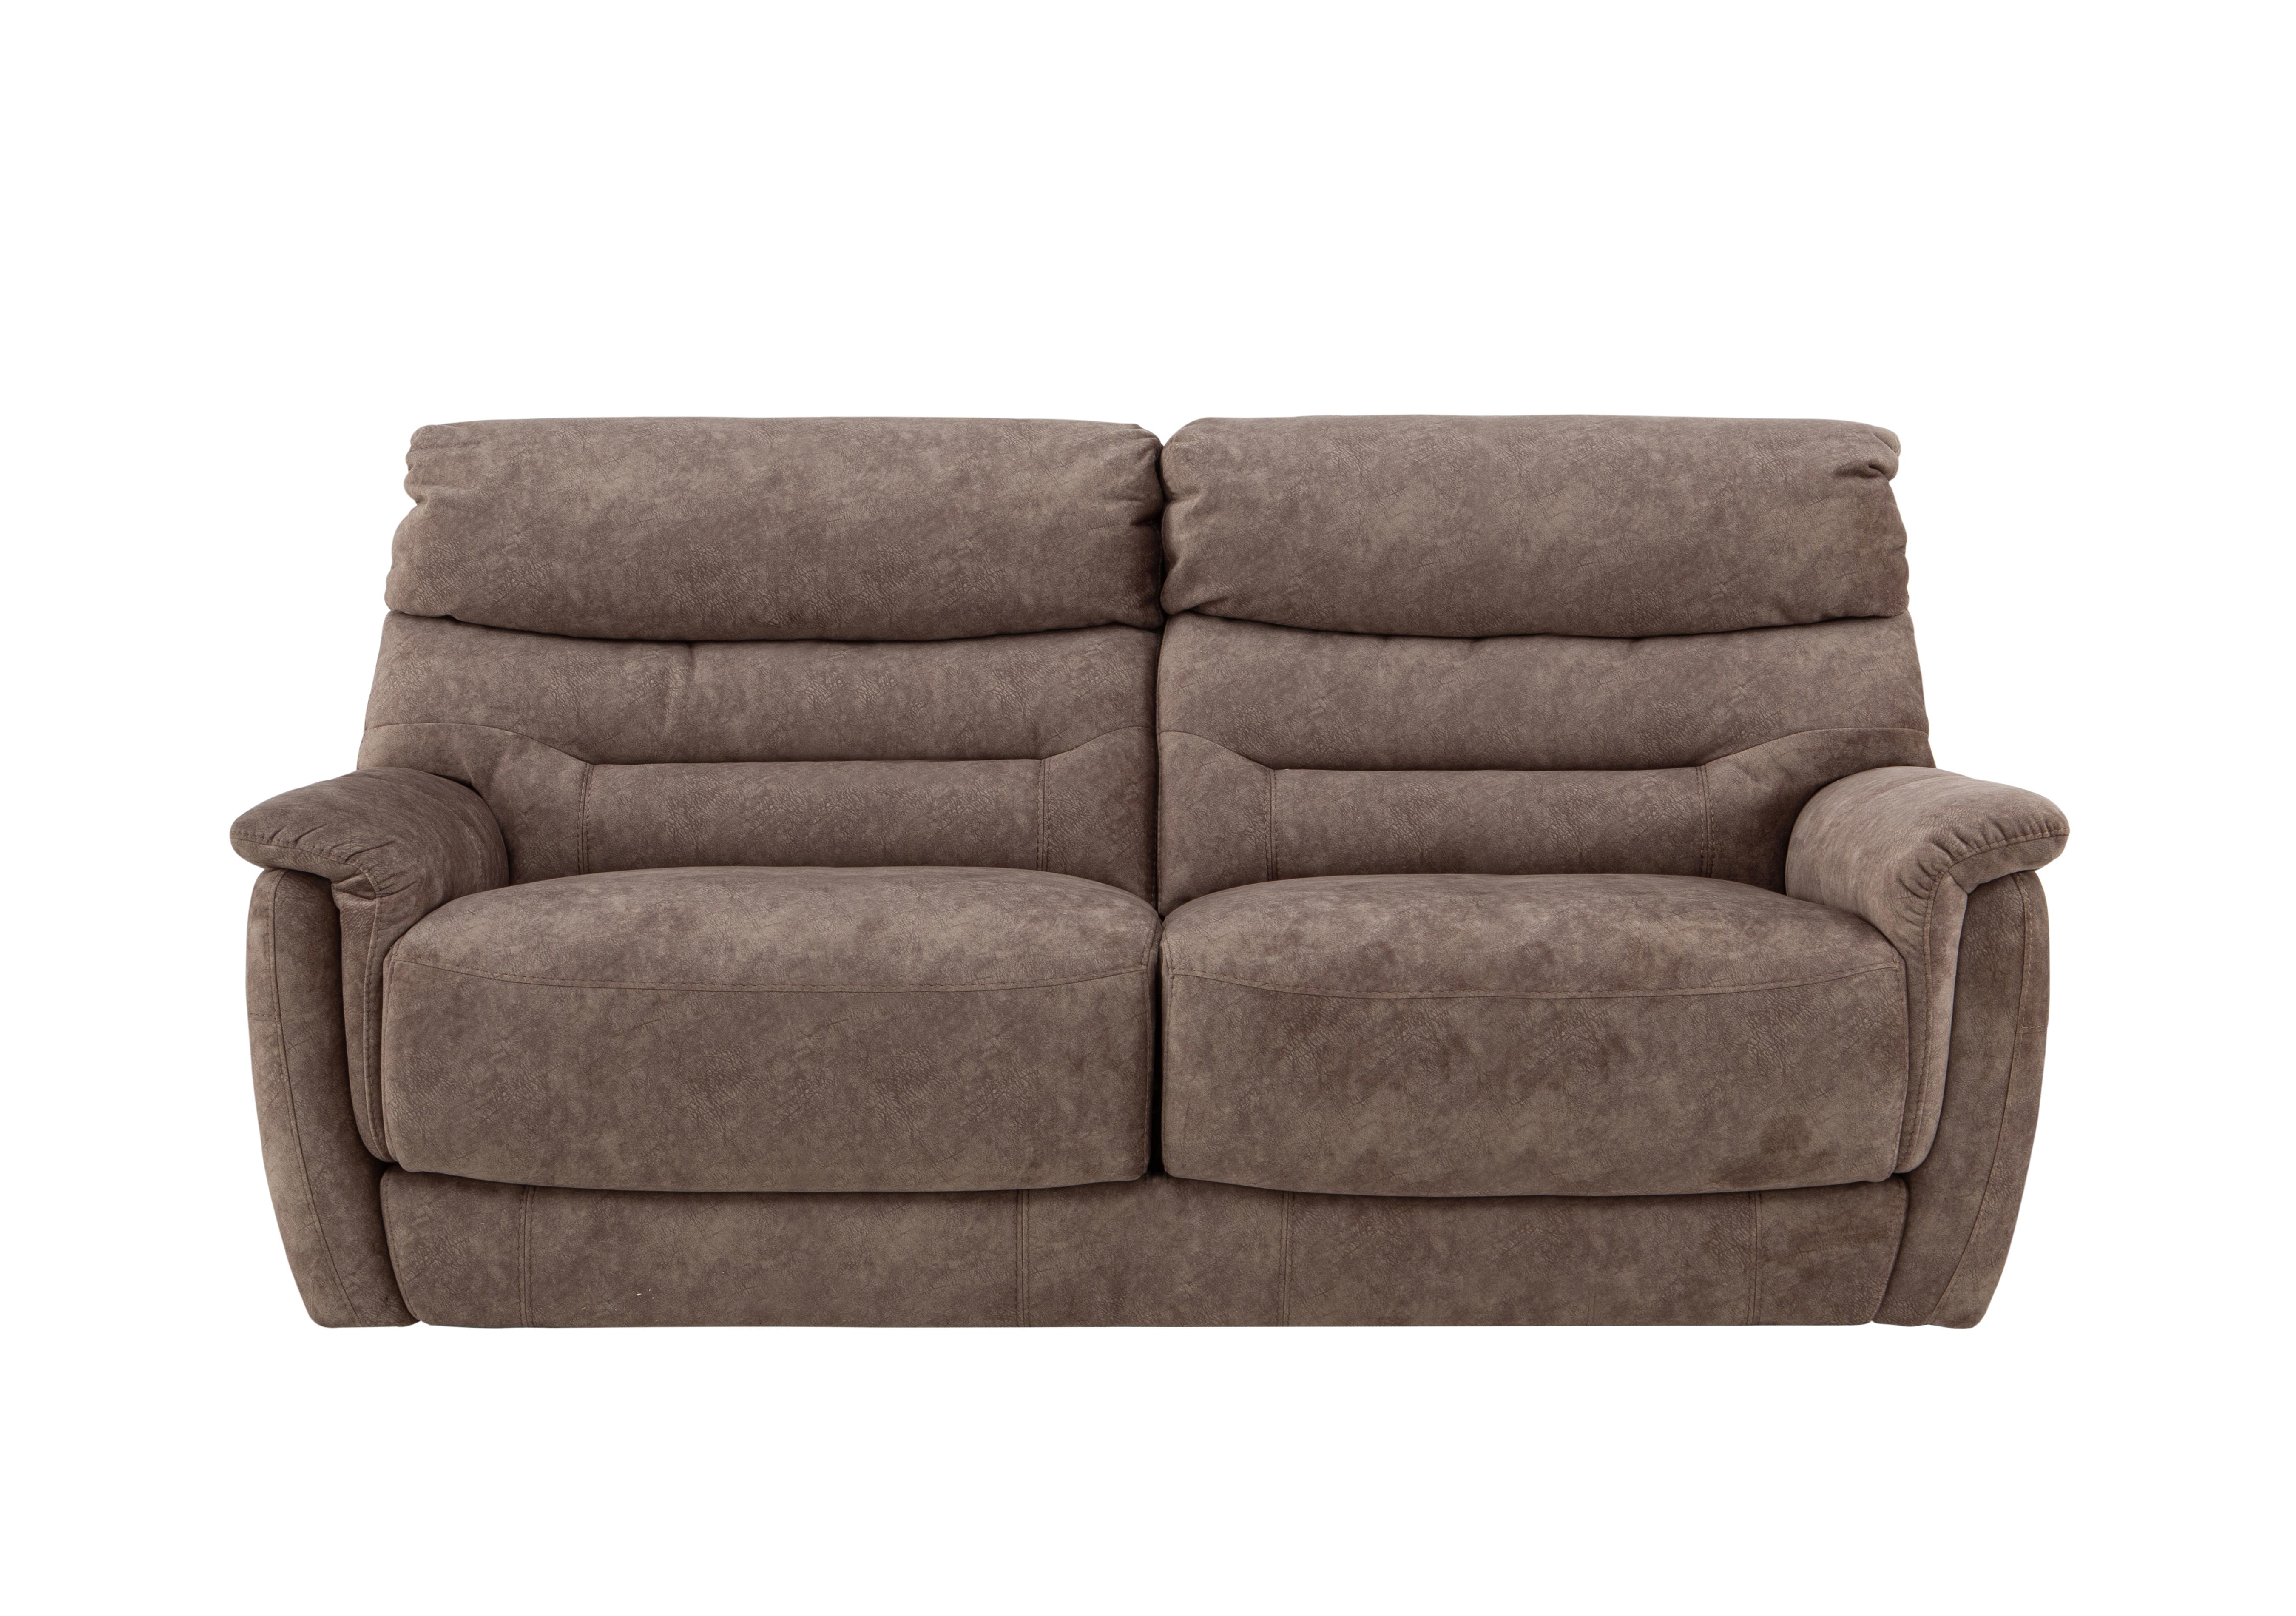 Chicago 3 Seater Fabric Sofa in Bfa-Bnn-R29 Mink on Furniture Village